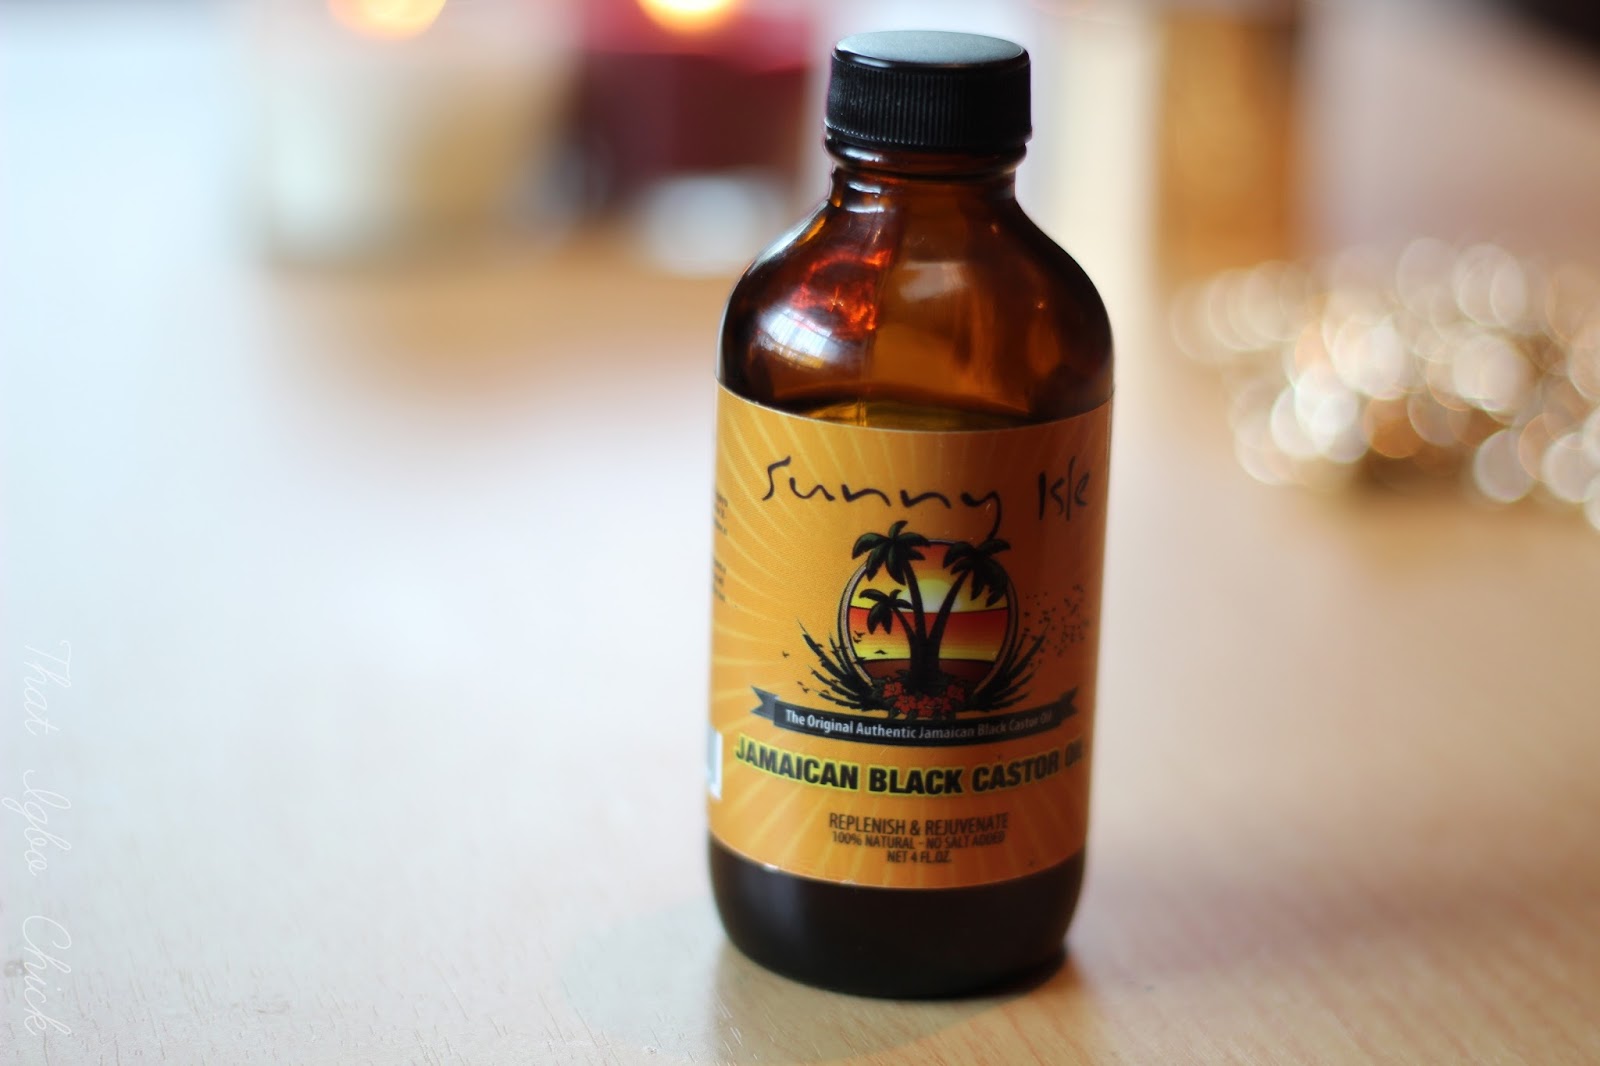 36 Top Pictures Castor Oil Black Hair : Jamaican Black Castor Oil: Benefits & Uses - Kinky ...